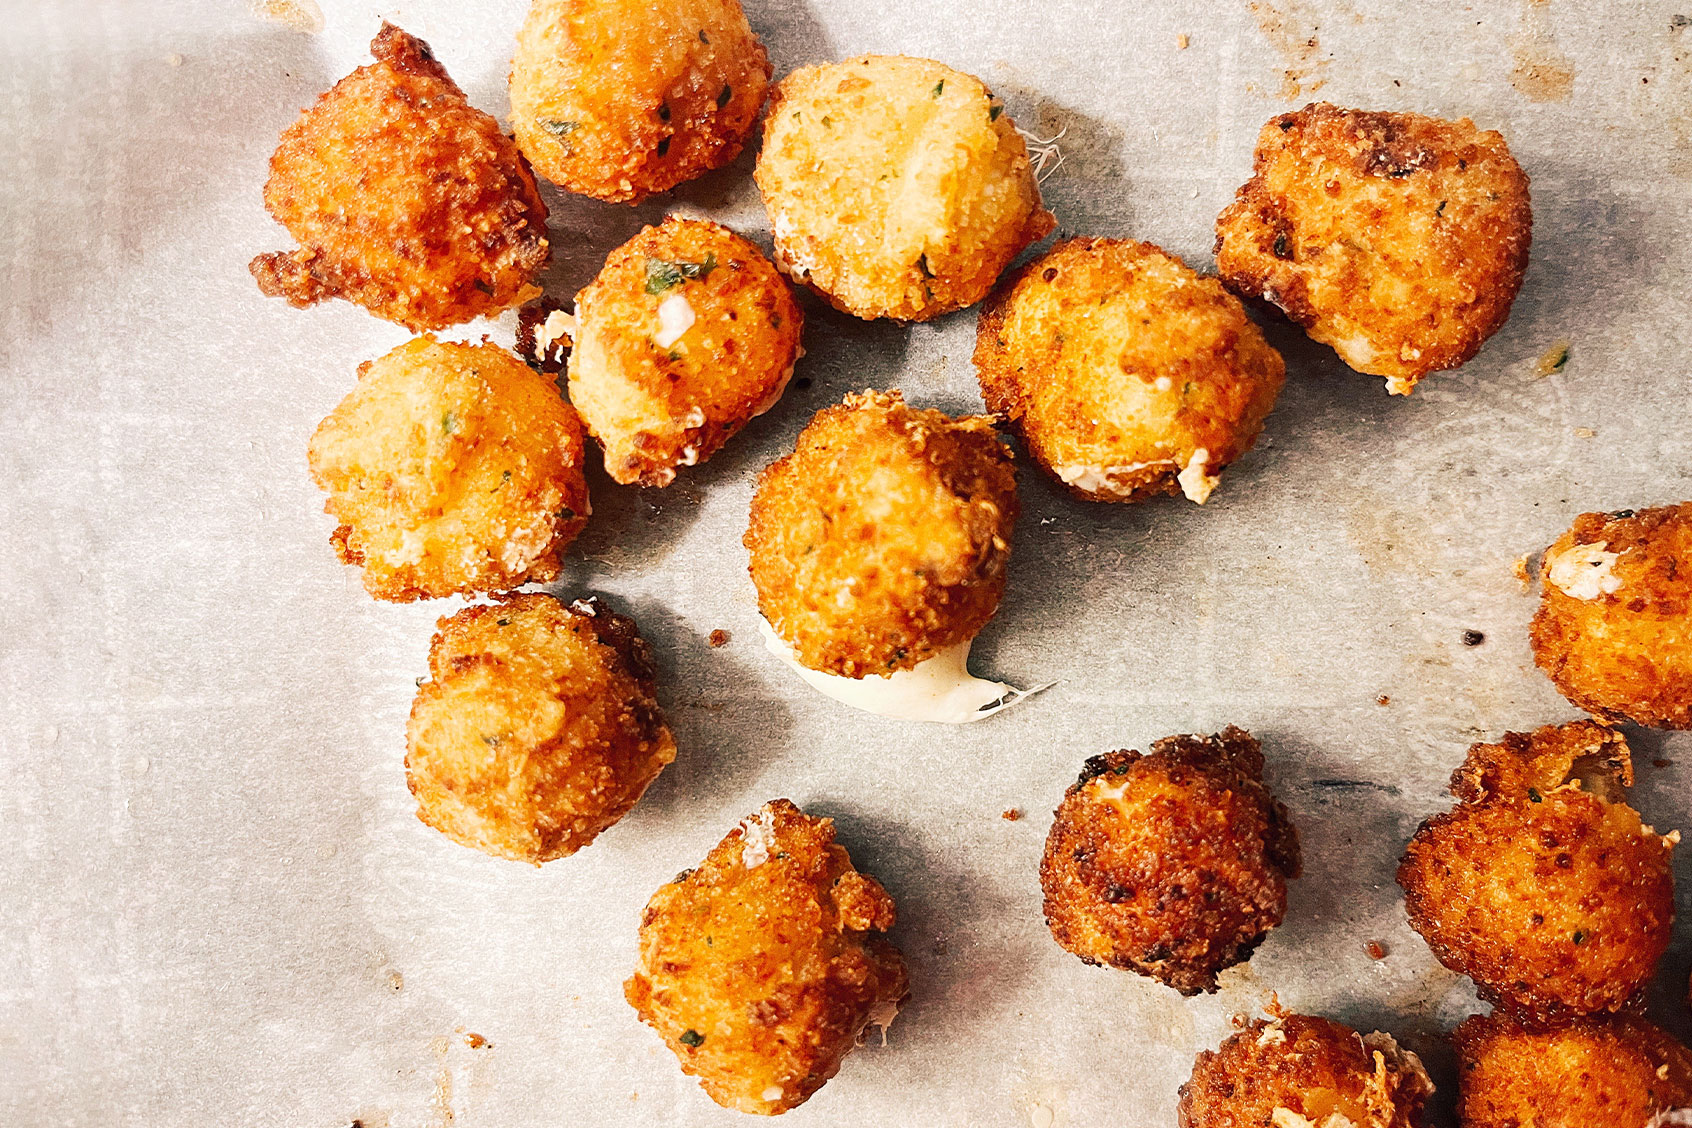 It’s almost too easy to make hot, cheesy, crunchy mozzarella balls